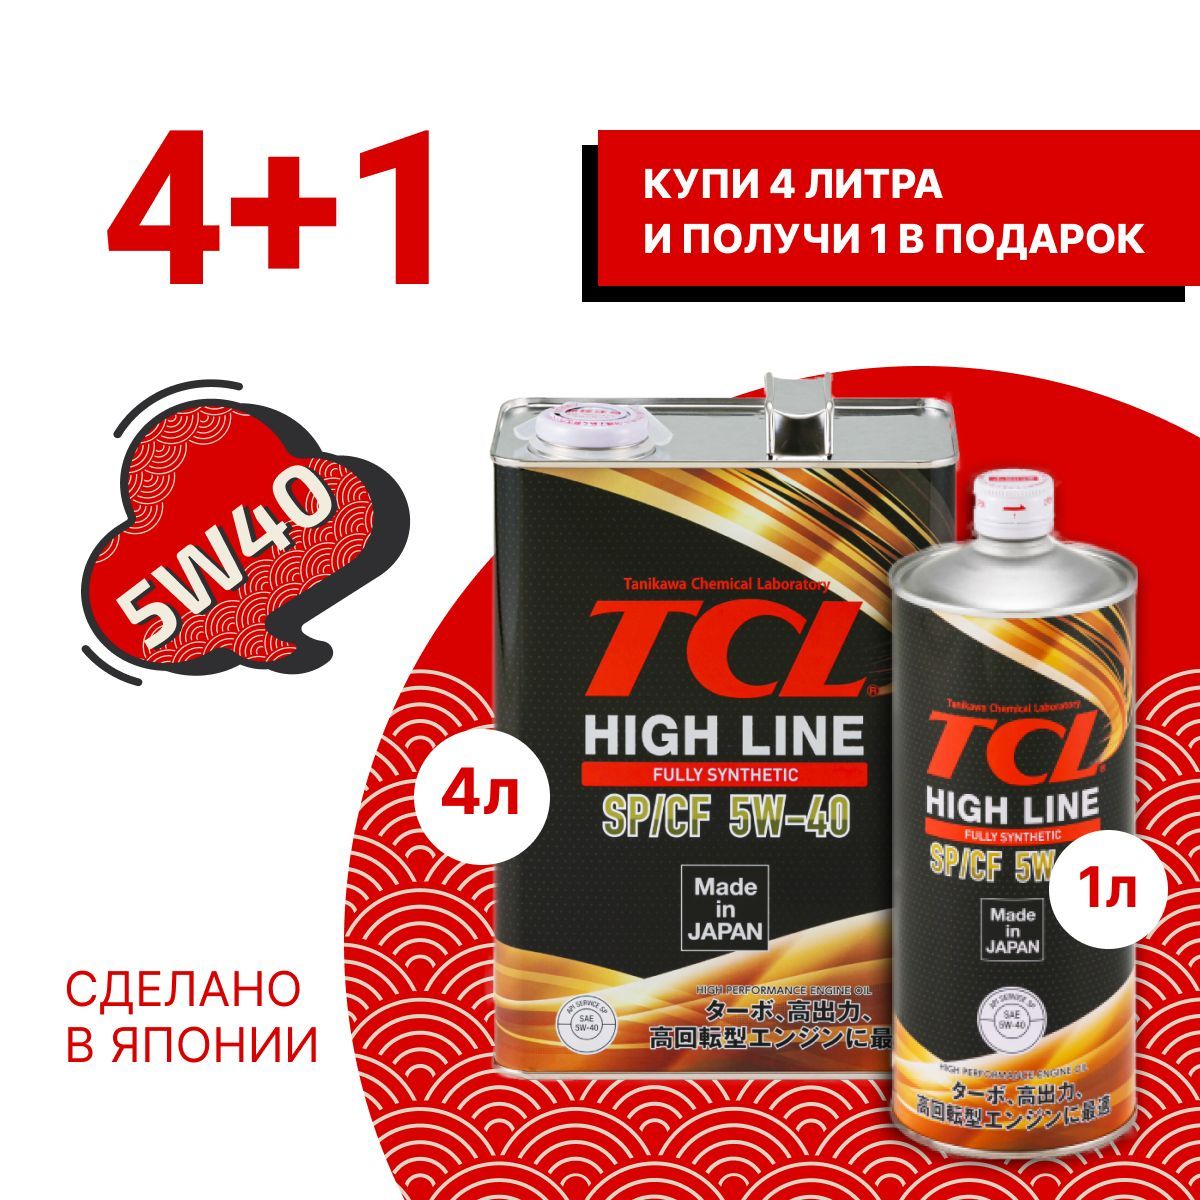 Масло tcl 5w40. TCL 5w30 1 промо набор. TCL масло. Честный отзыв о масле ТСЛ 5 40.